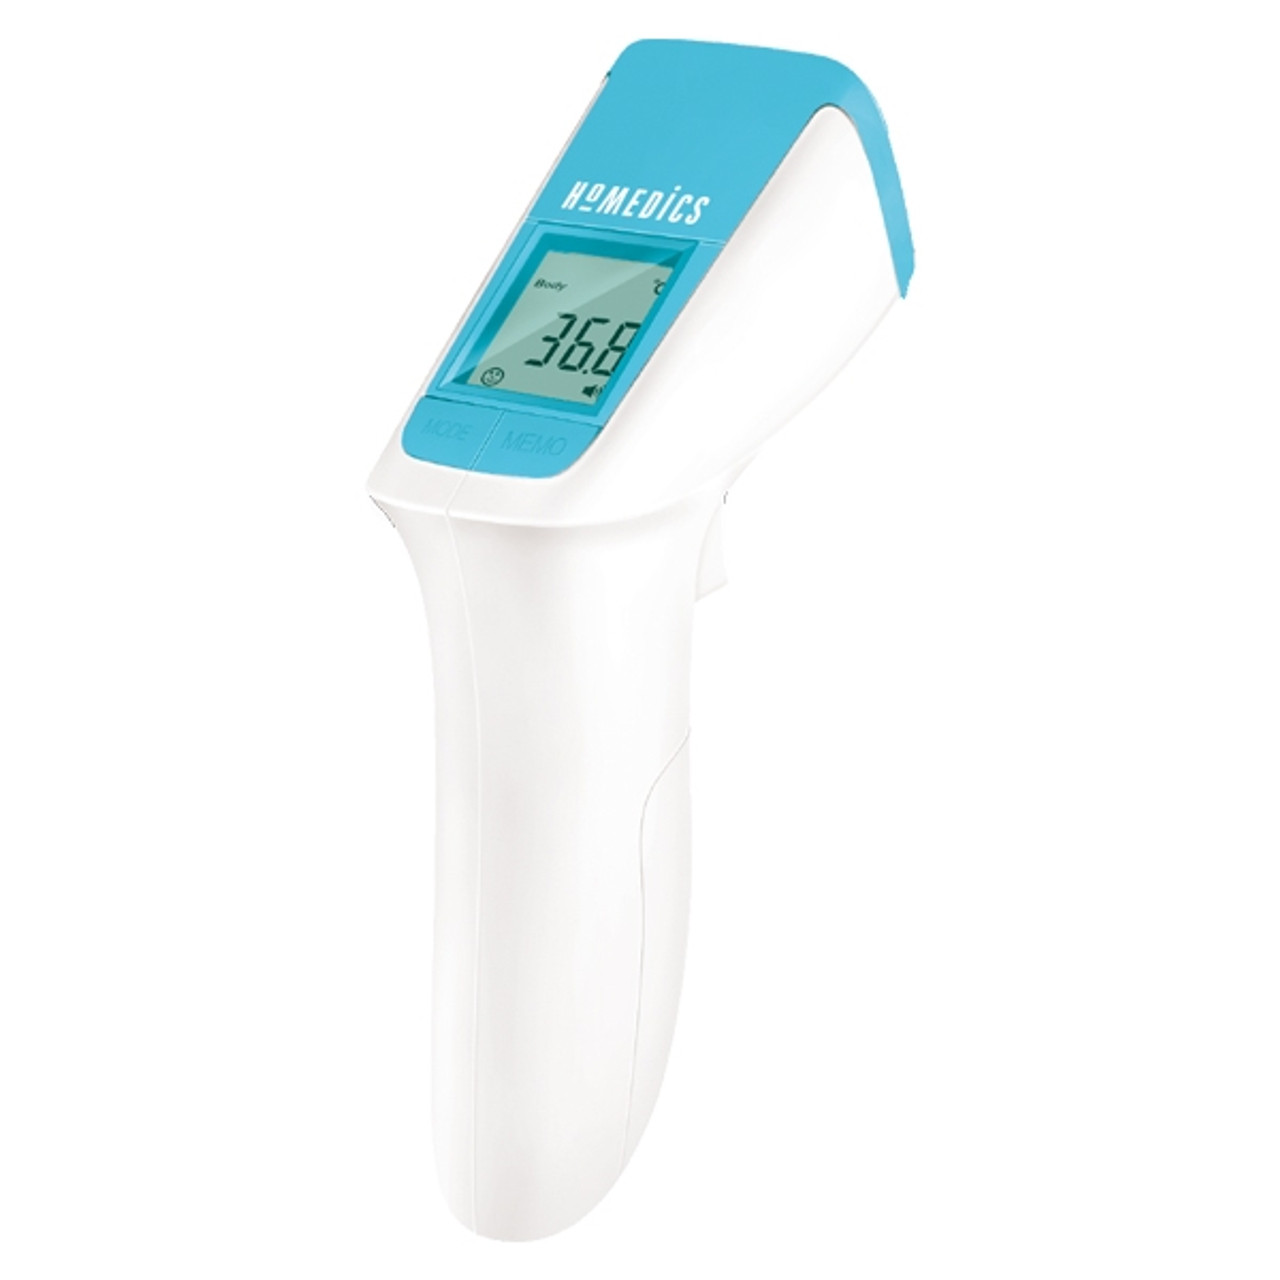 HoMedics 2 berührungsloses Infrarot-Thermometer